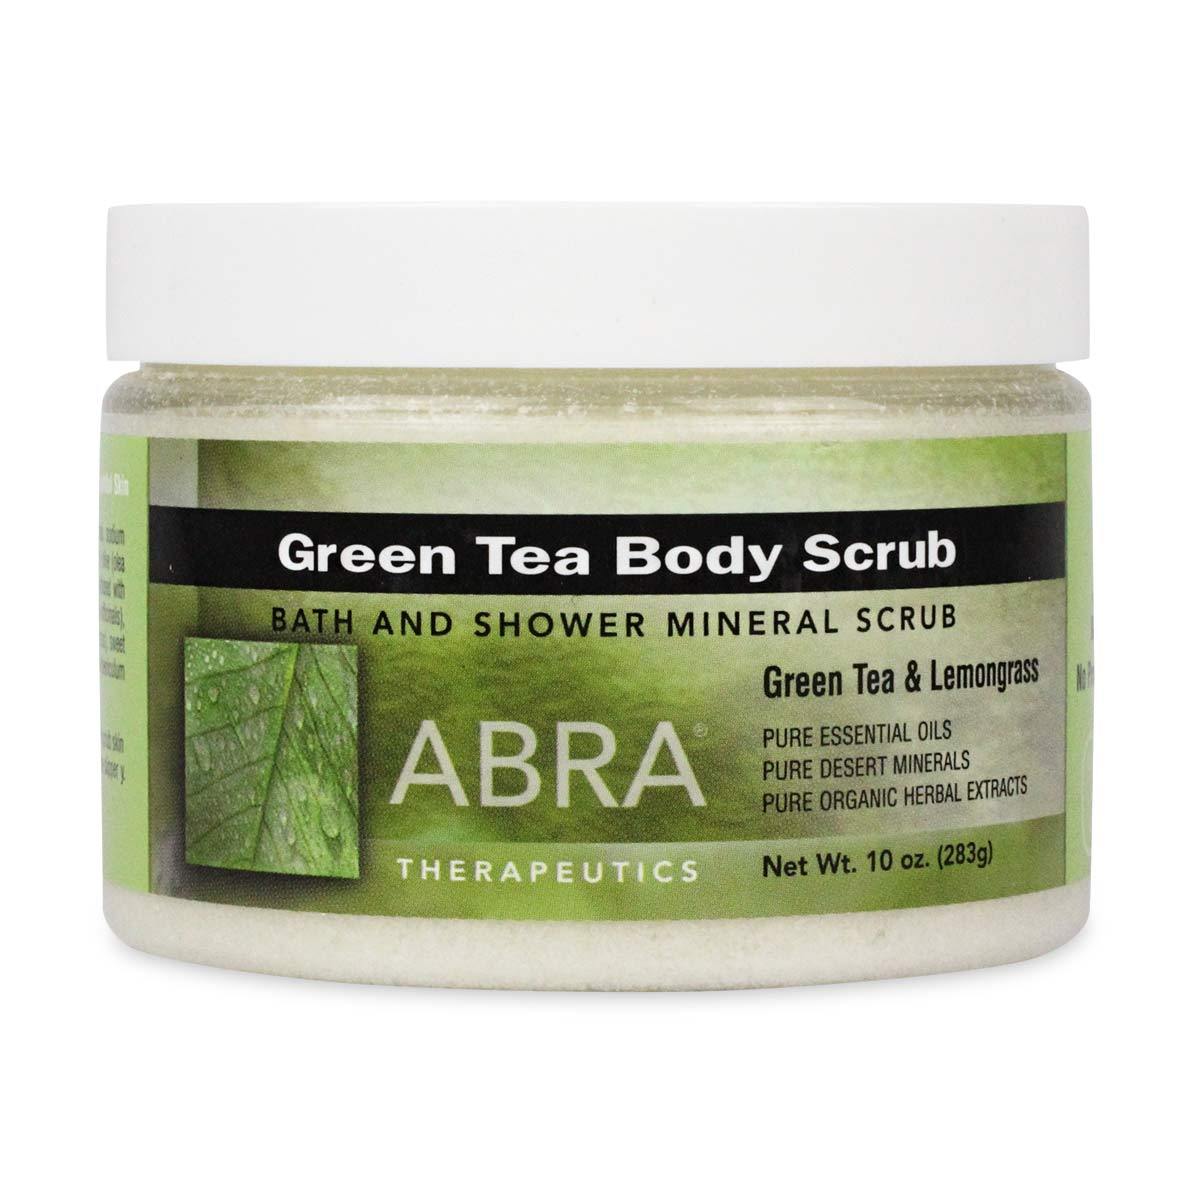 Primary image of Green Tea Body Scrub